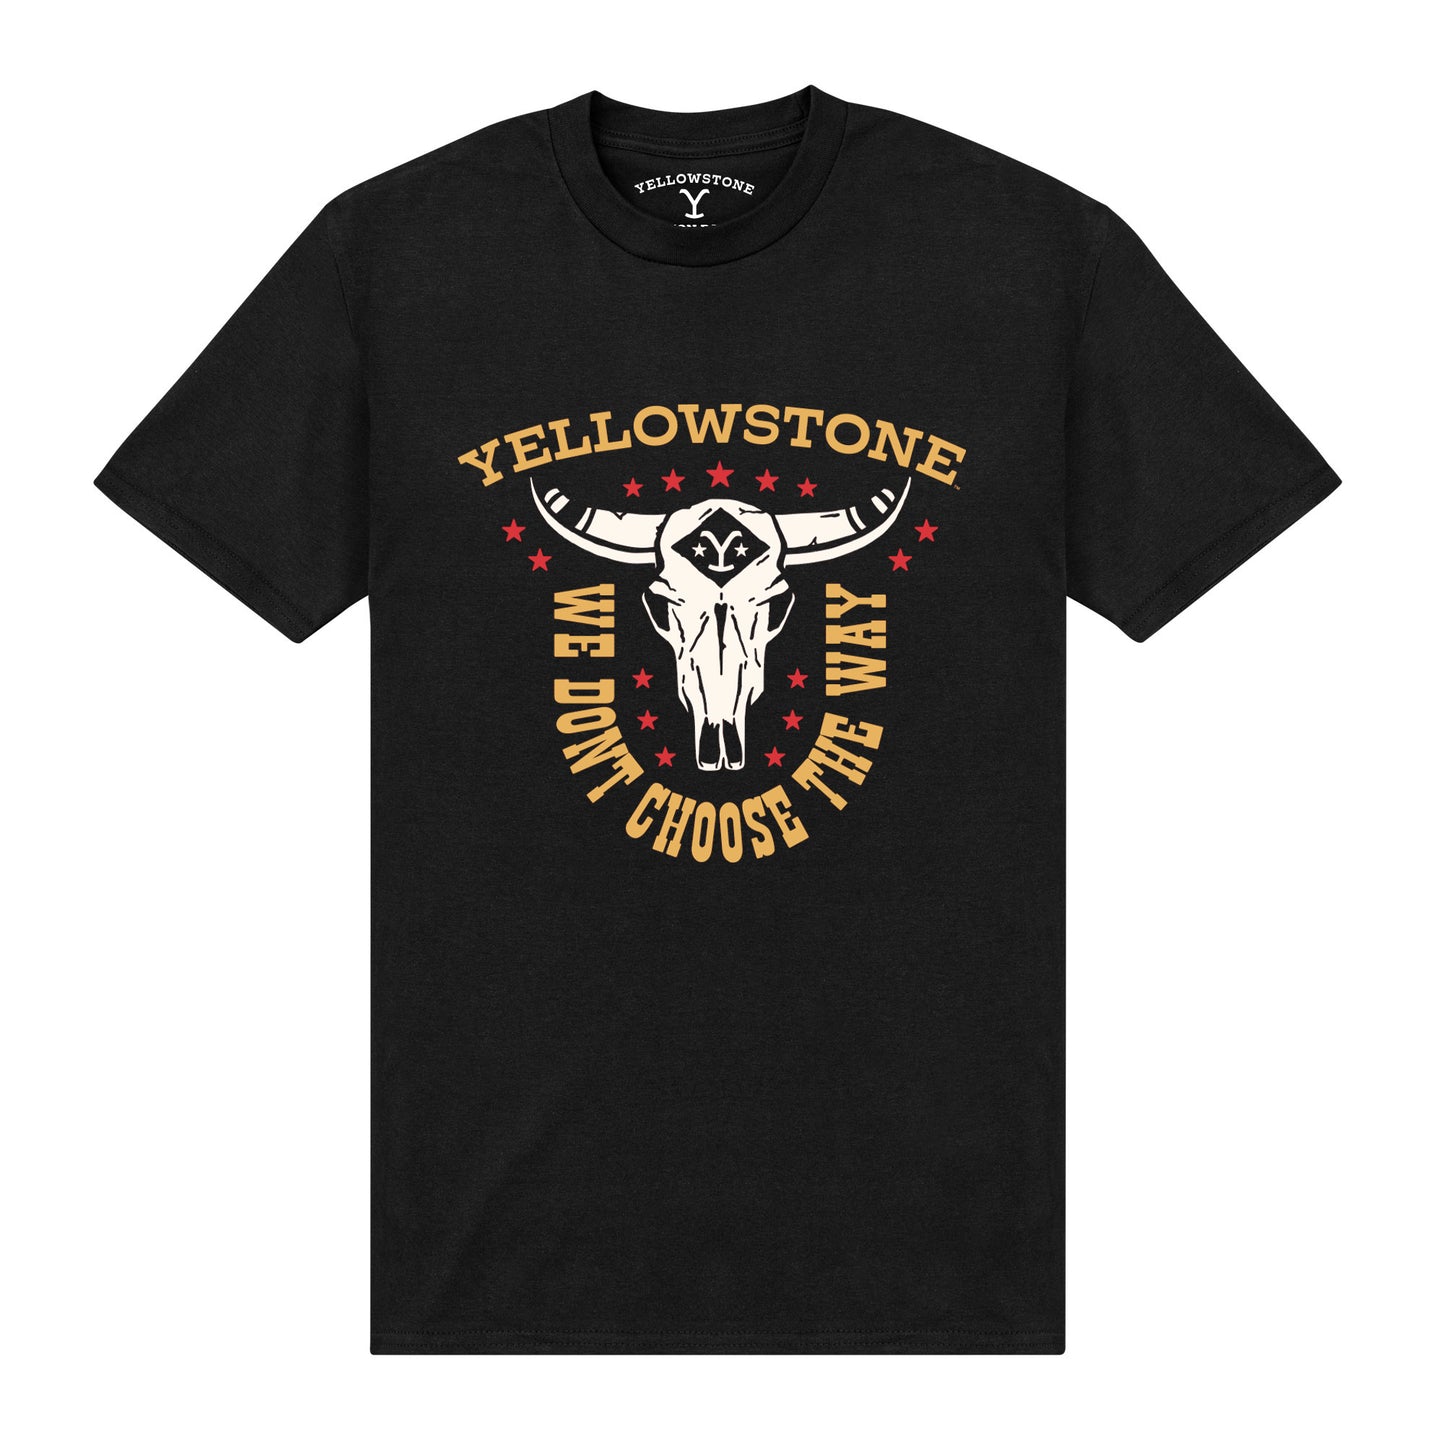 Yellowstone We Don't Choose T-Shirt